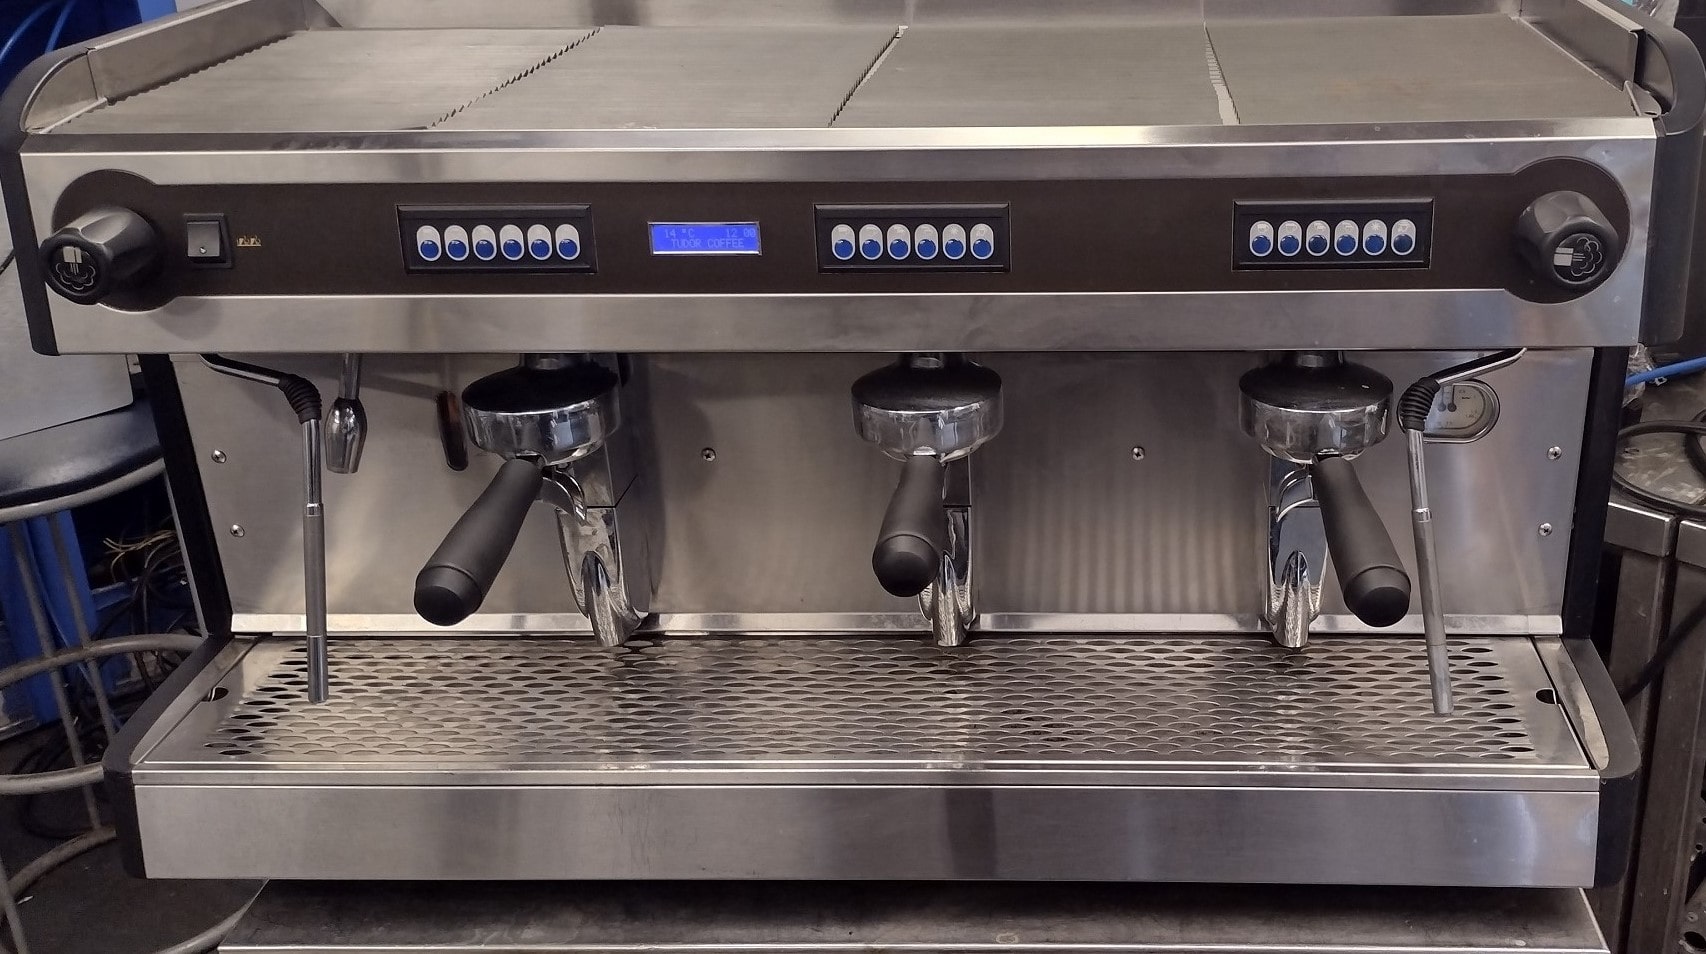 13 Amazing Espresso Machine Accessories For 2023